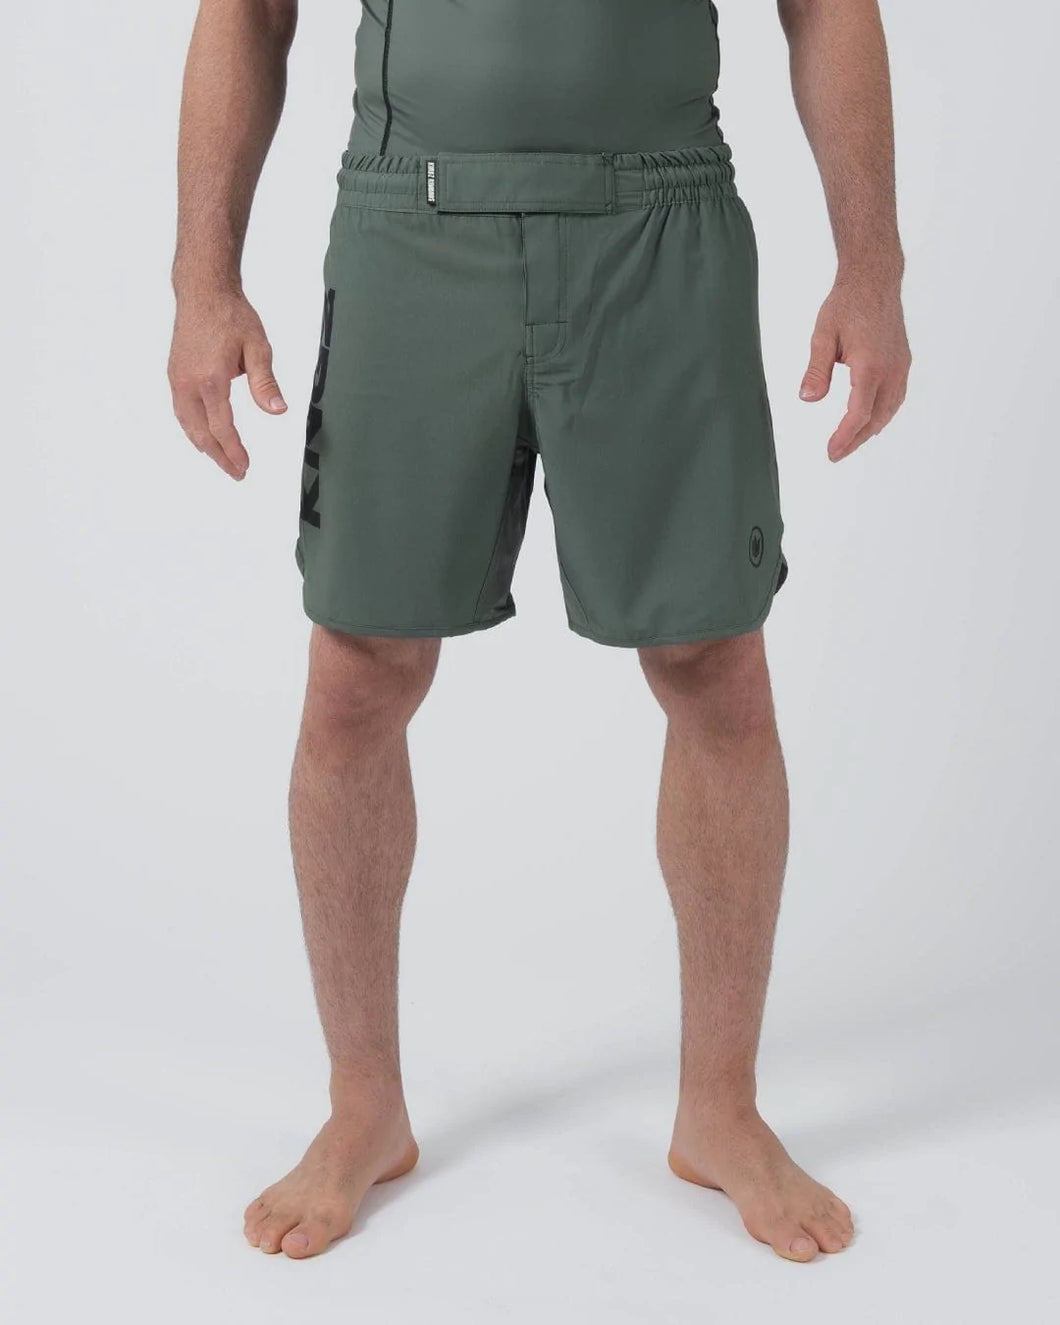 Kingzkore shorts v2- verde